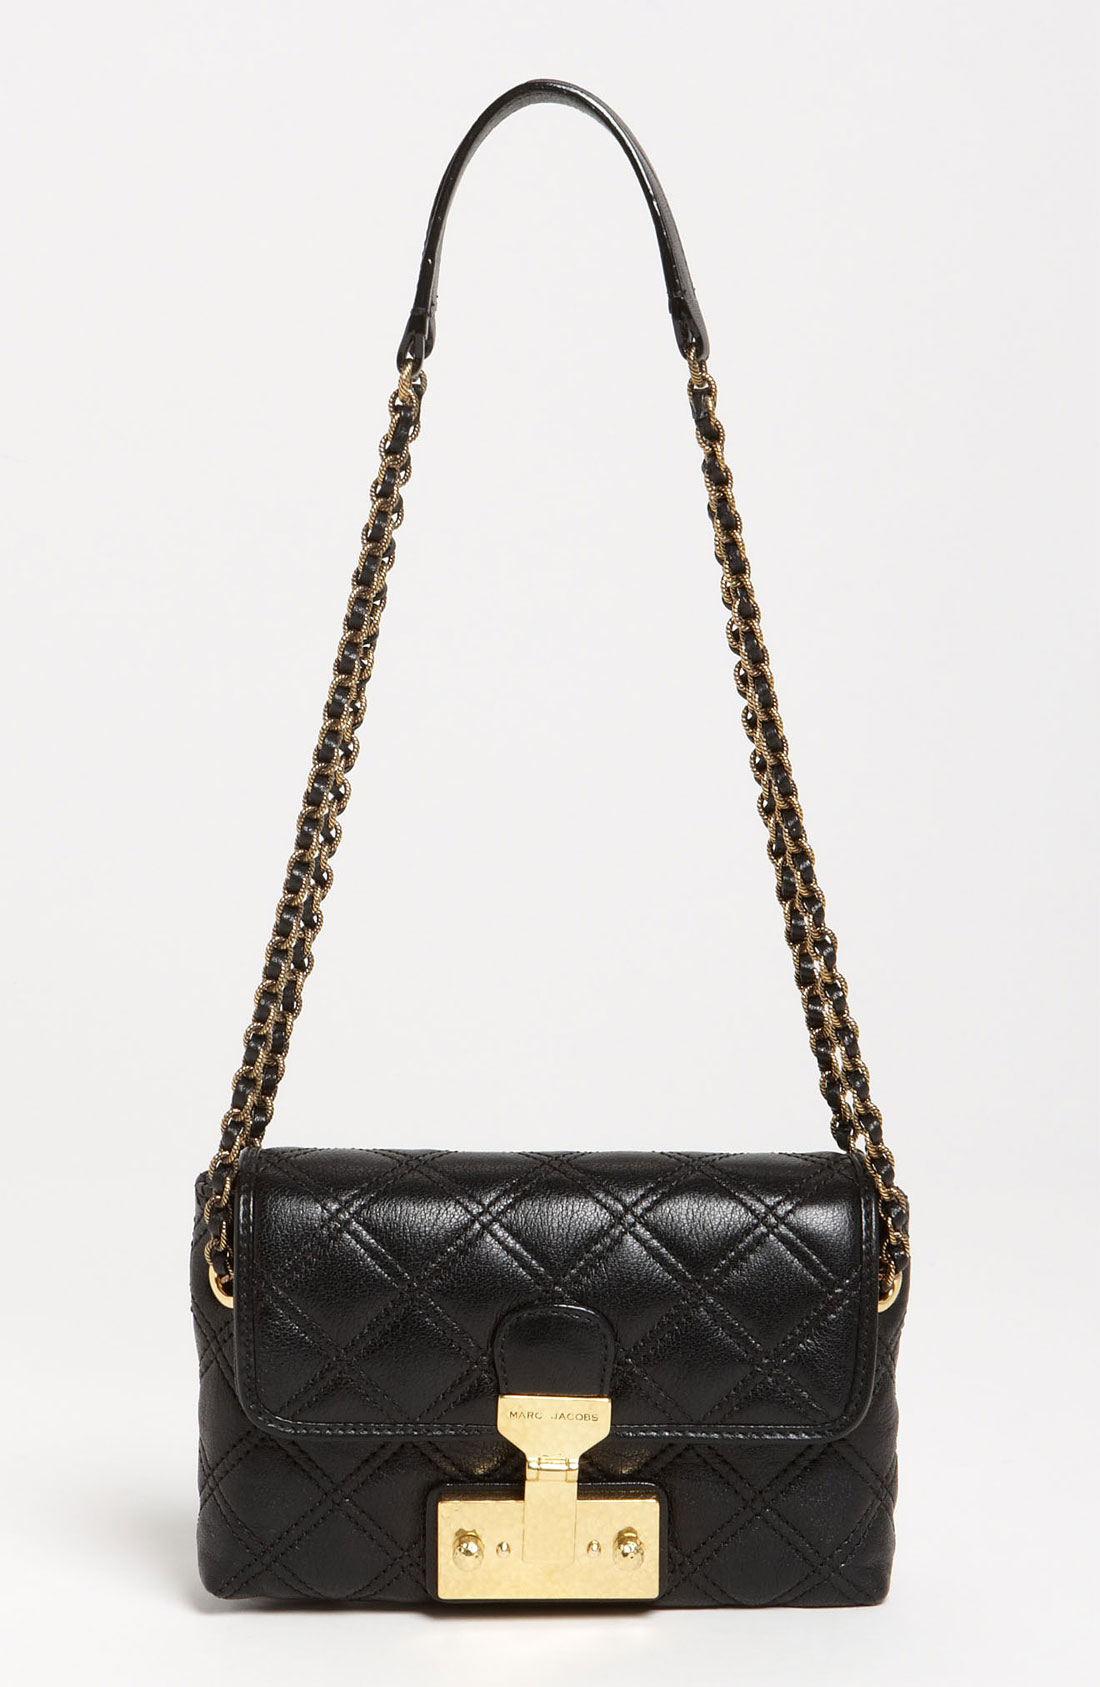 Marc Jacobs Baroque Single Leather Shoulder Bag in Black | Lyst